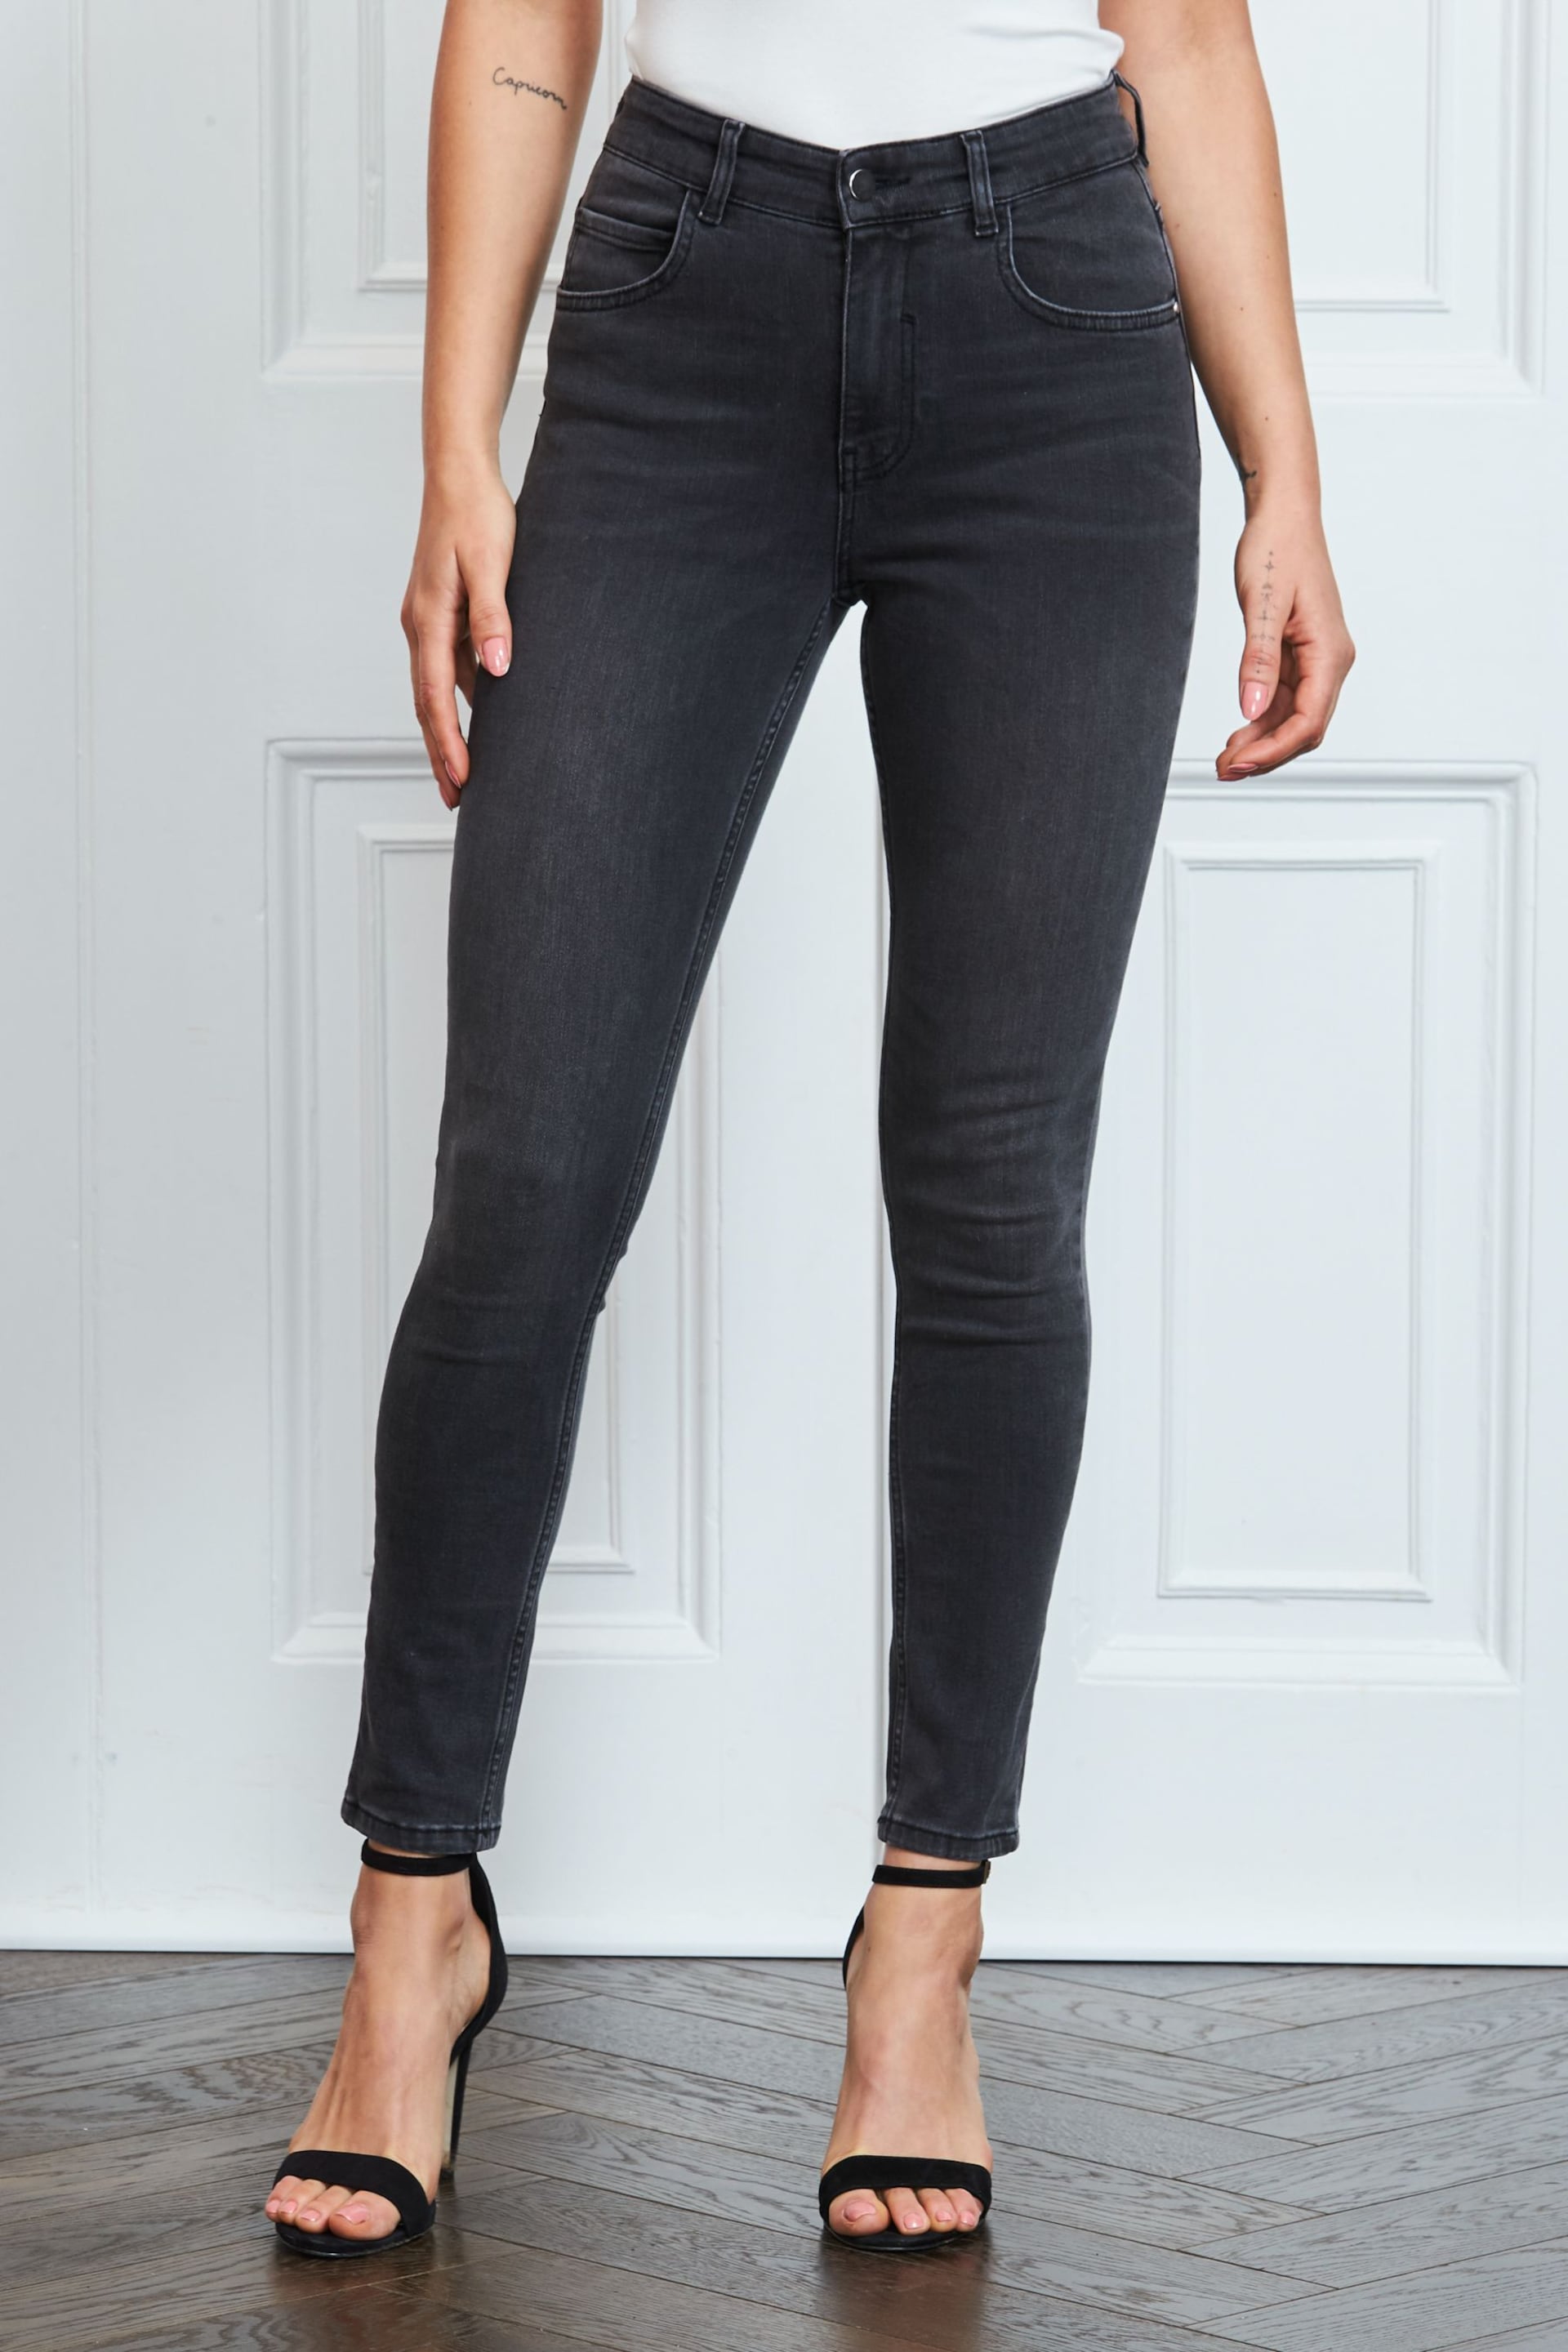 Sosandar Light Grey Tall Perfect Skinny Jeans - Image 2 of 4